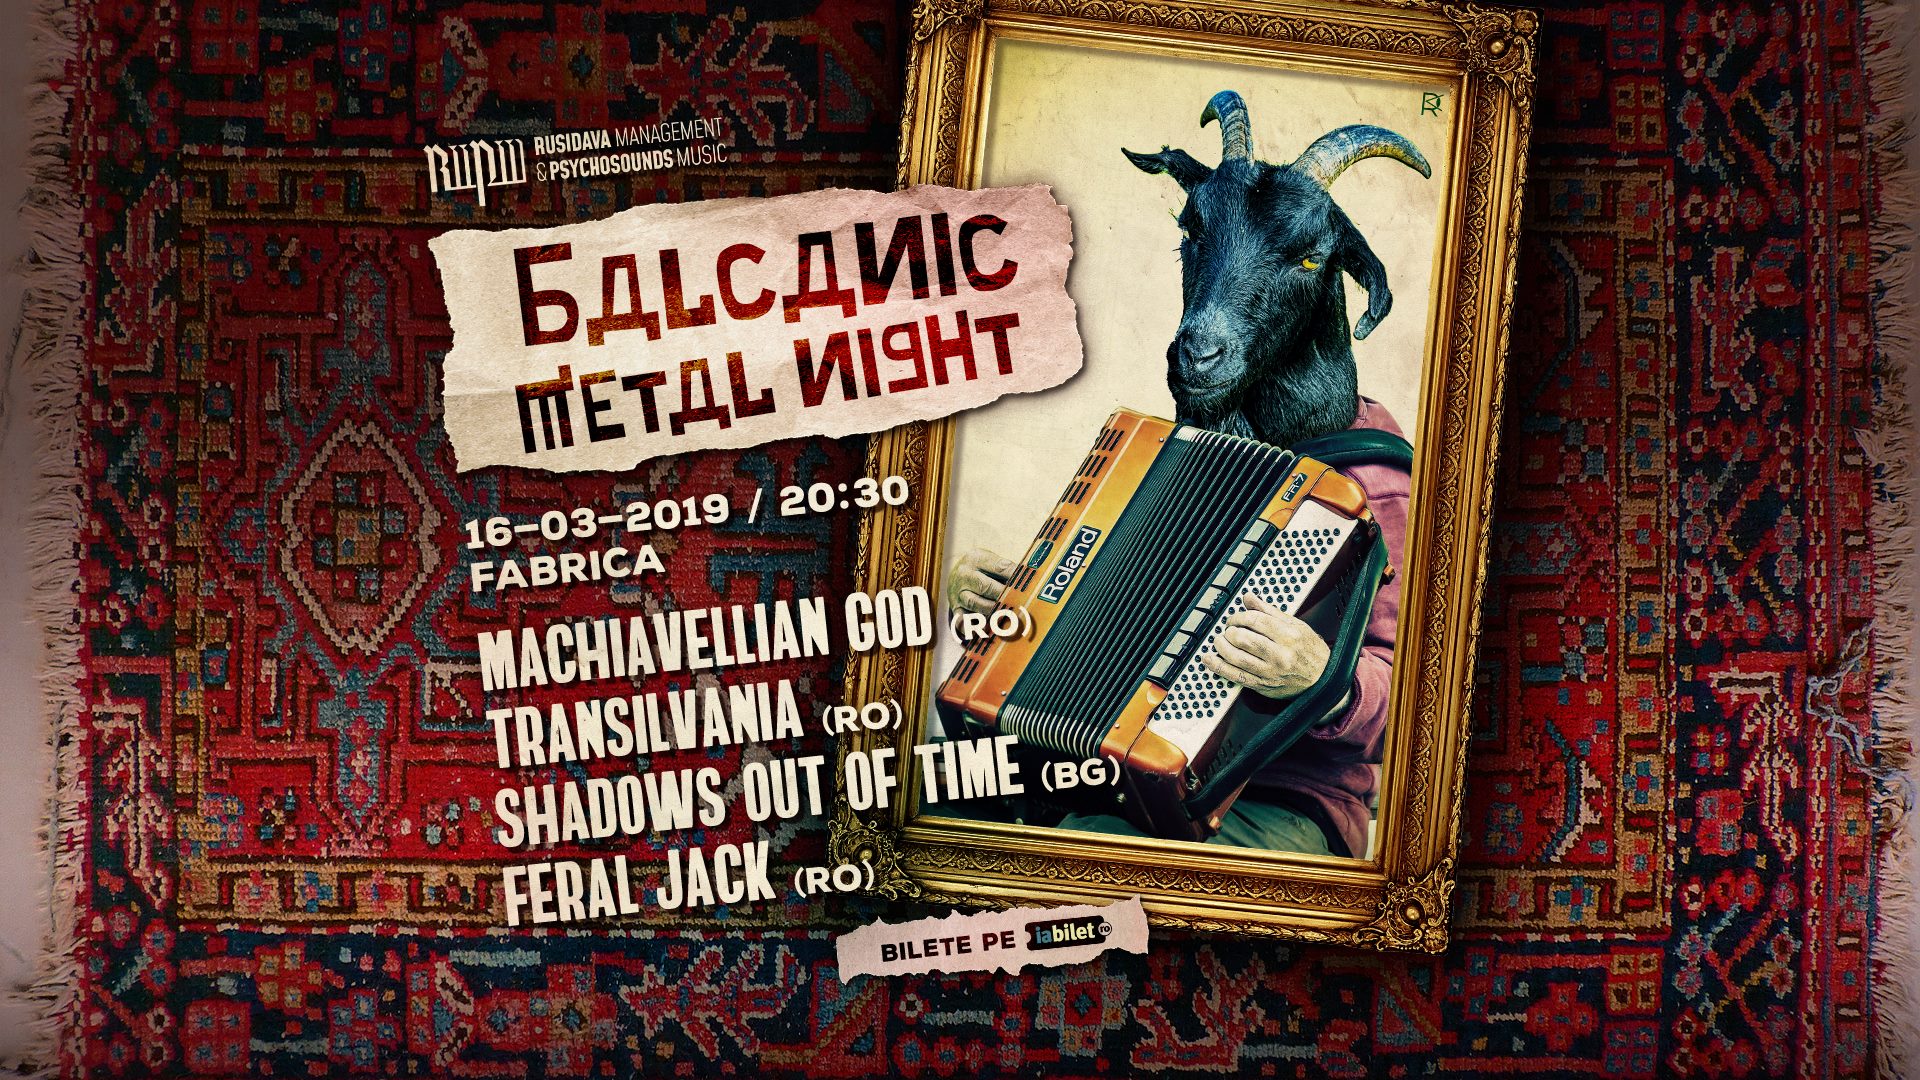 Balcanic Metal Night